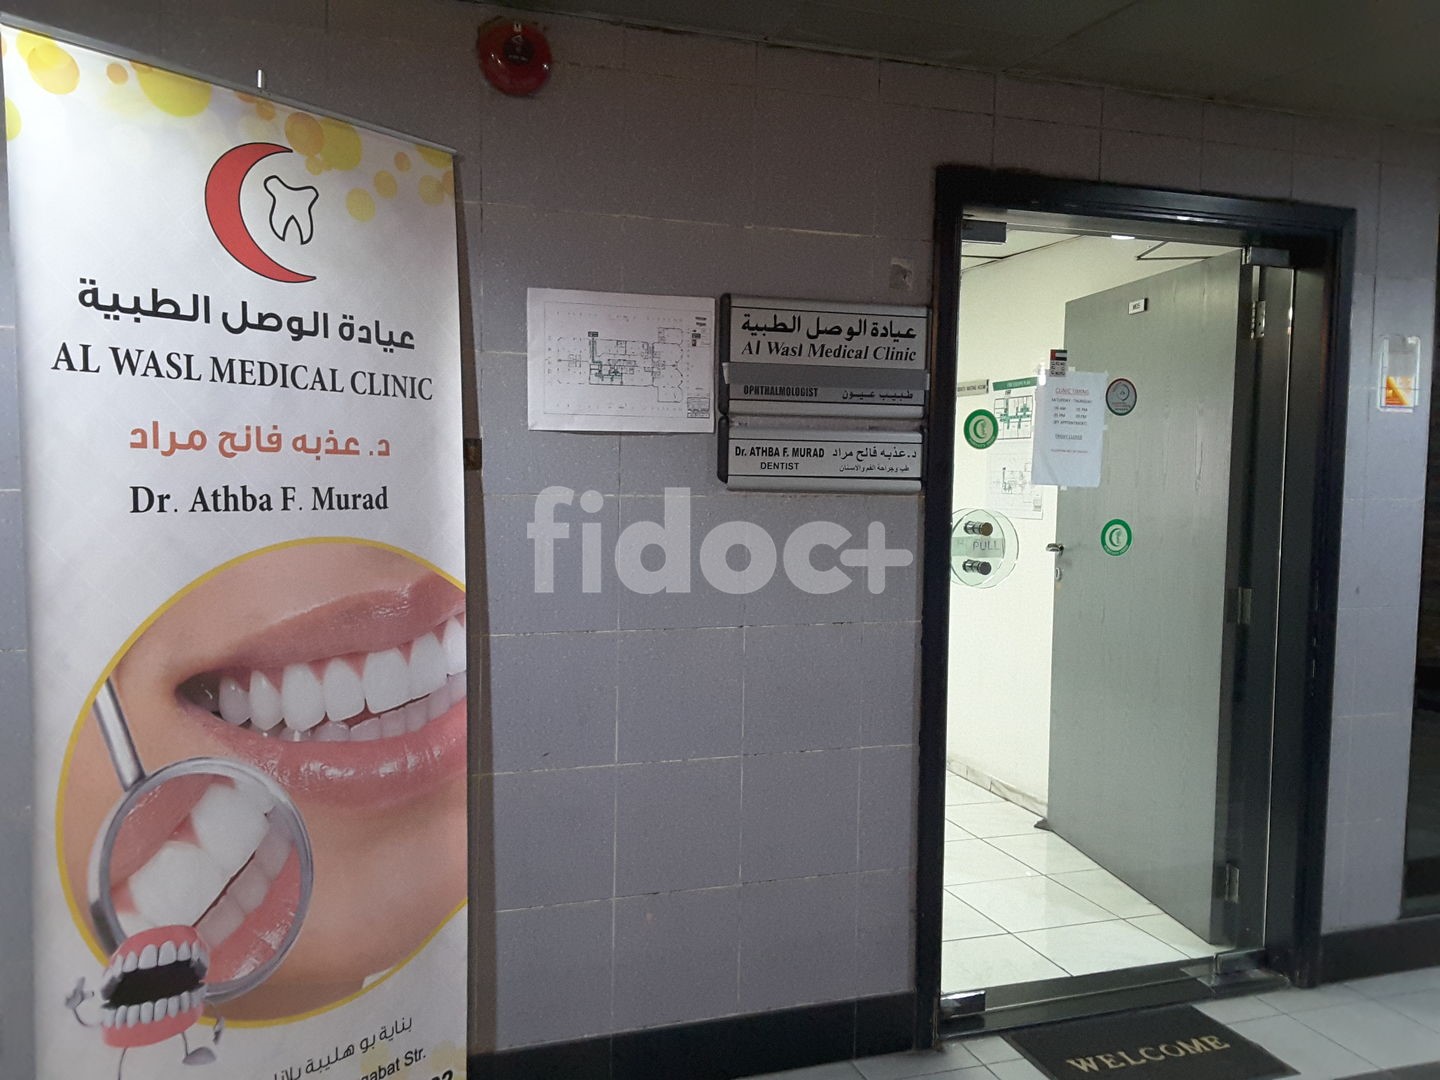 Al Wasl Medical Clinic, Dubai